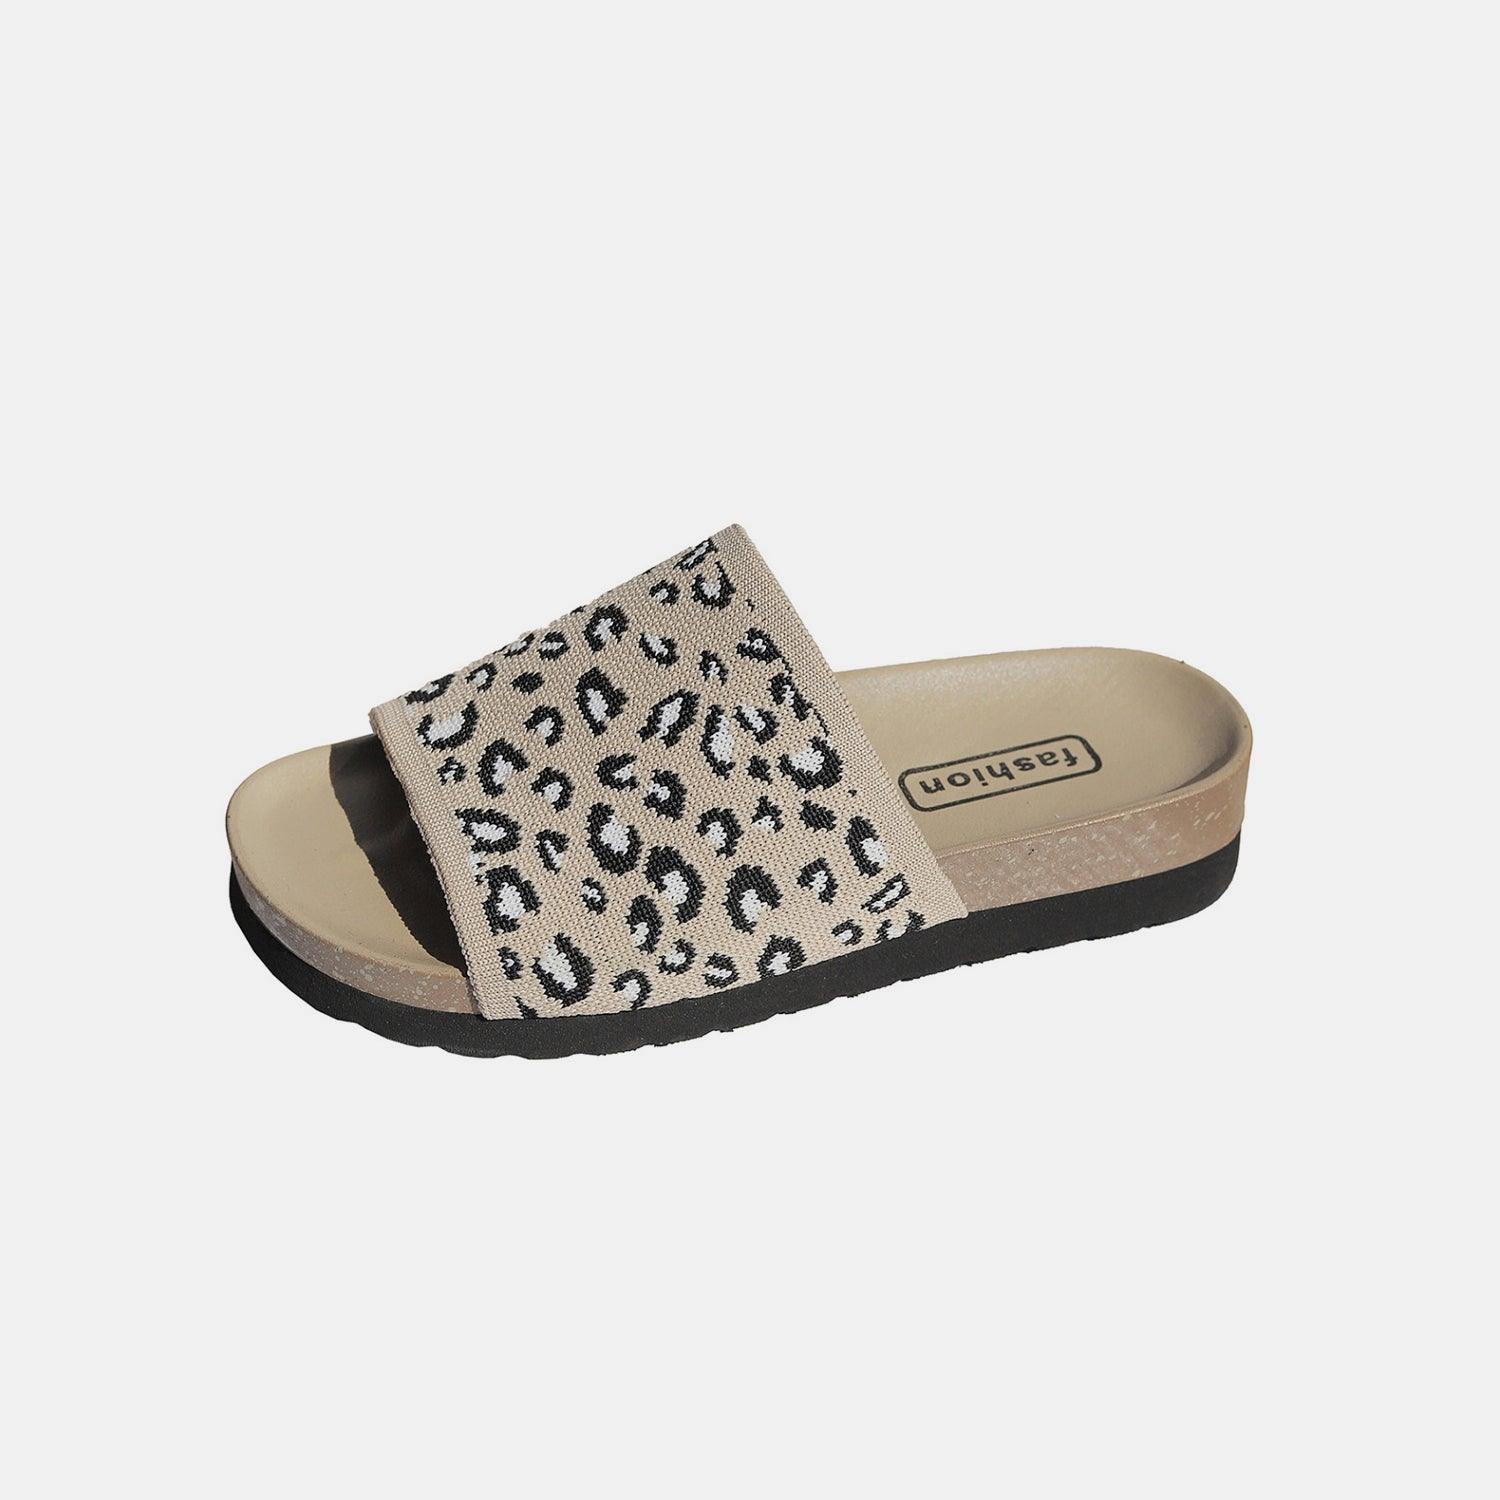 a women's sandal with a leopard print